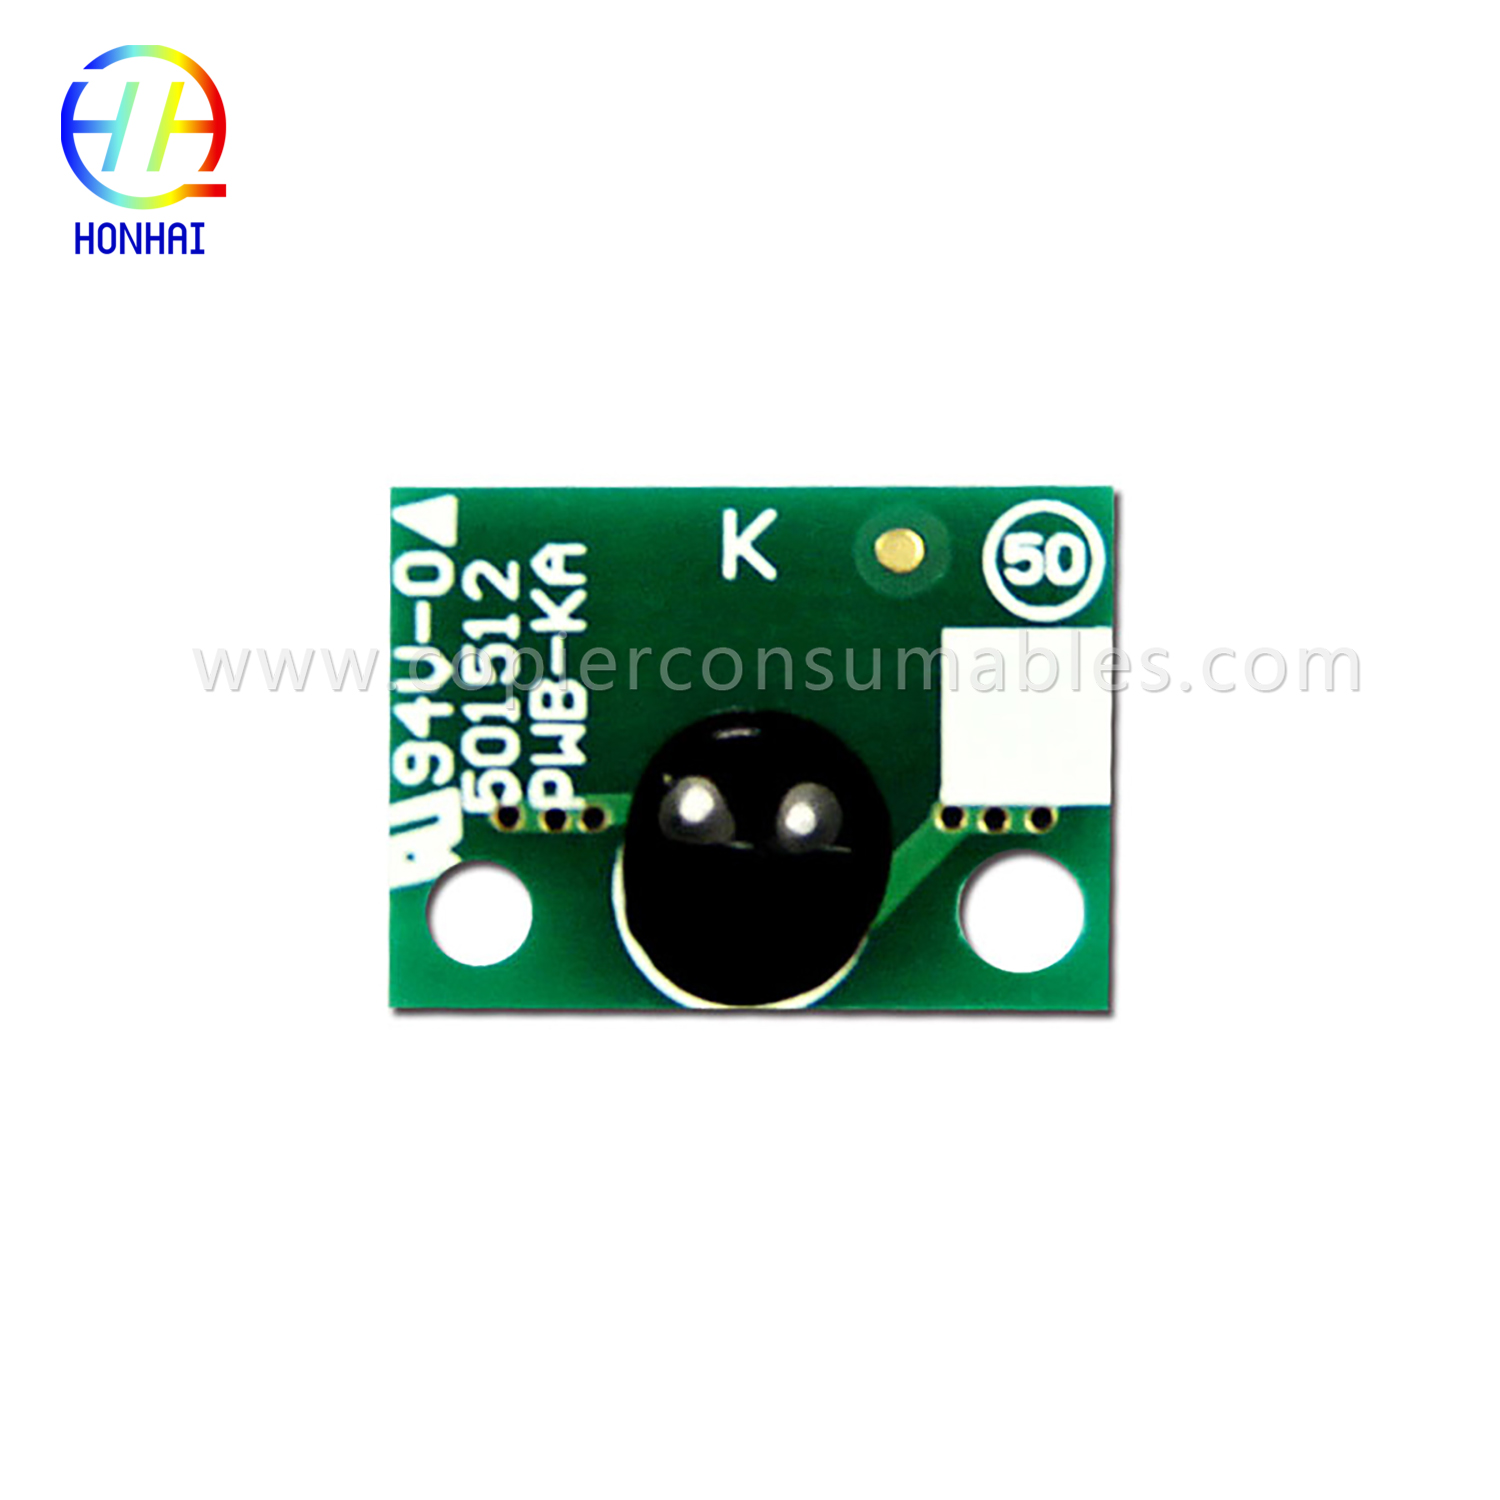 Tinte Cartridge Chip for Konica Minolta C454 C224 (2)